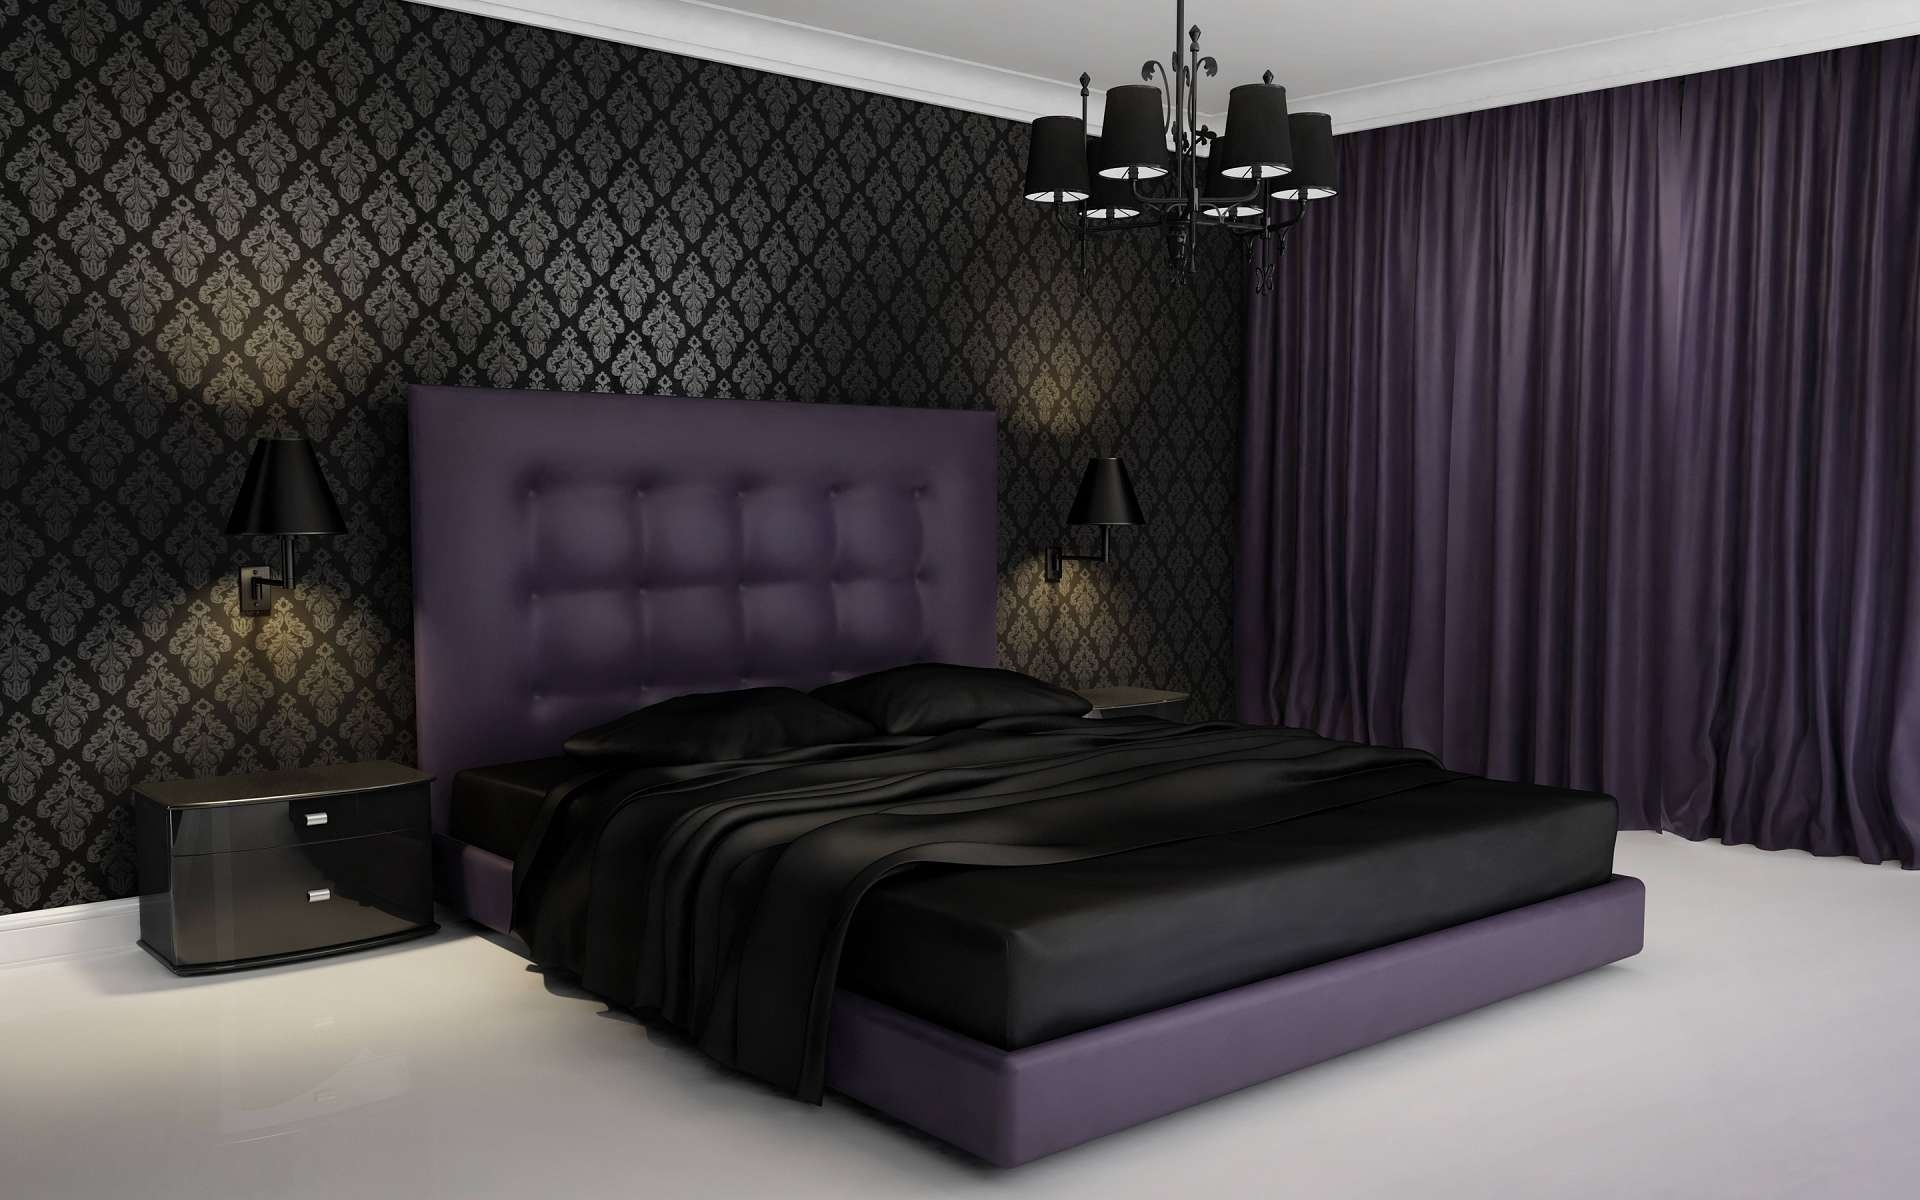 london wallpaper for bedrooms,bedroom,bed,purple,furniture,room